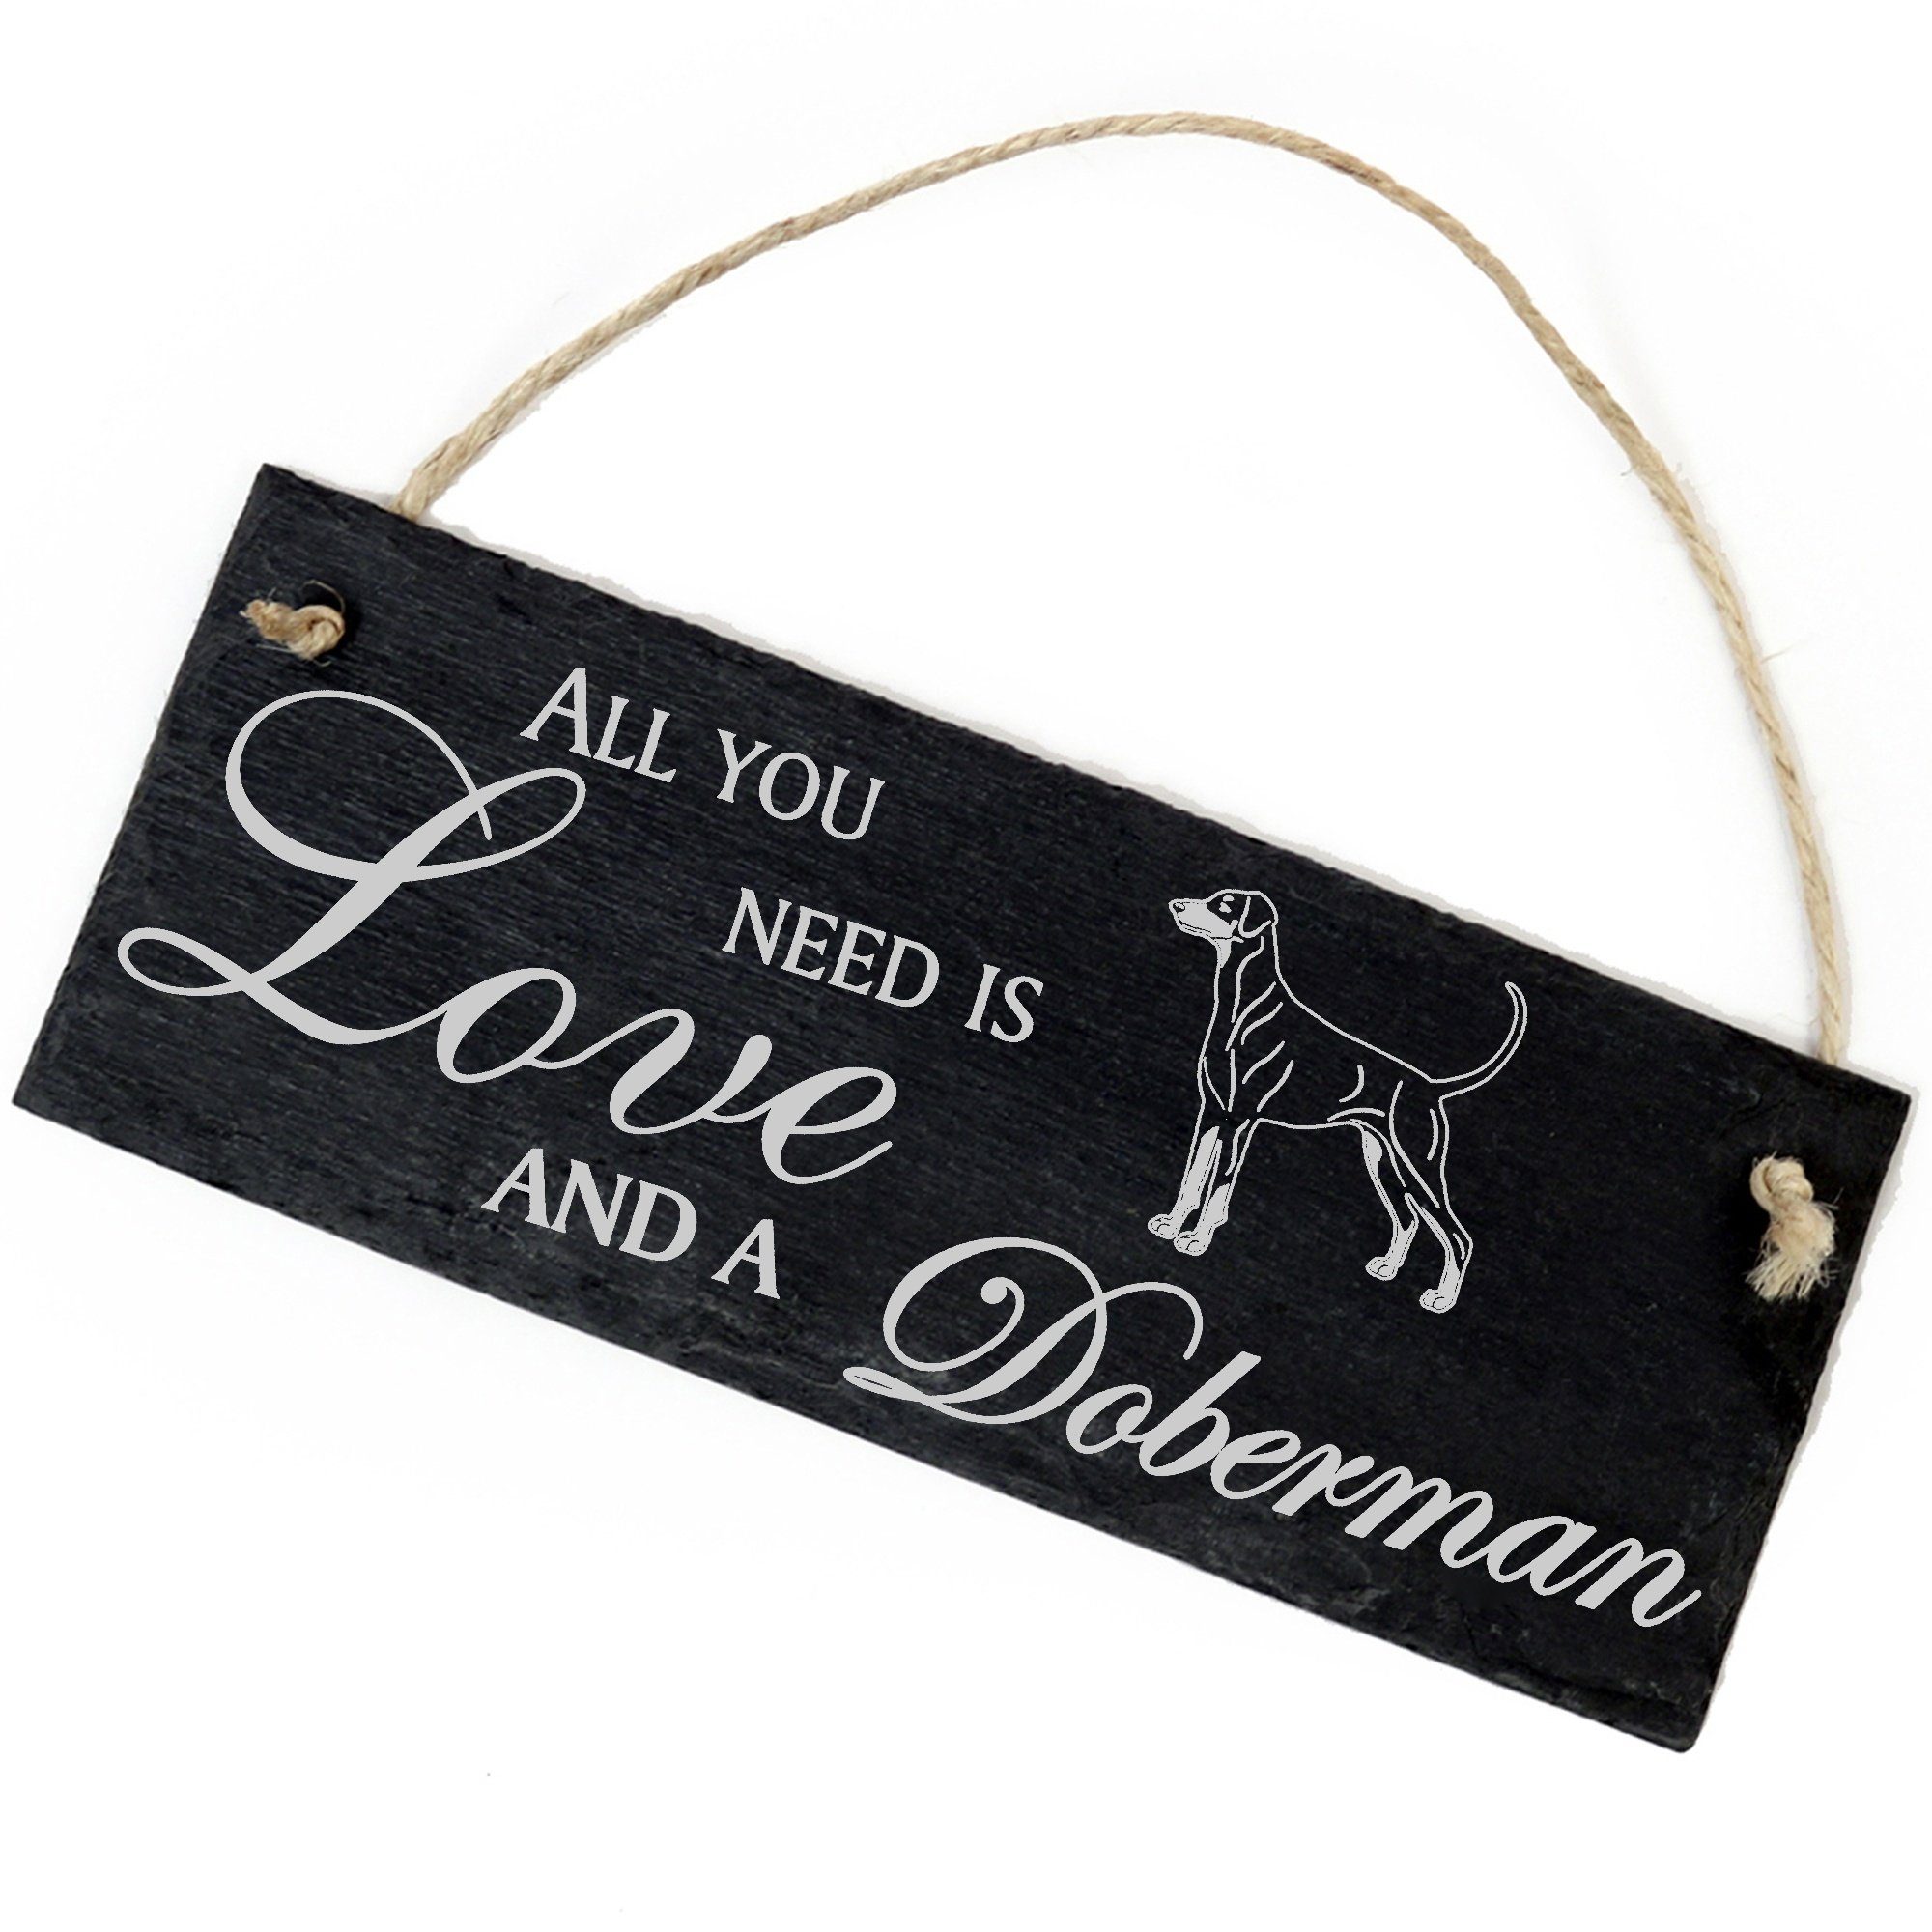 Dekolando Hängedekoration Dobermann 22x8cm All Love need you a and is Doberman